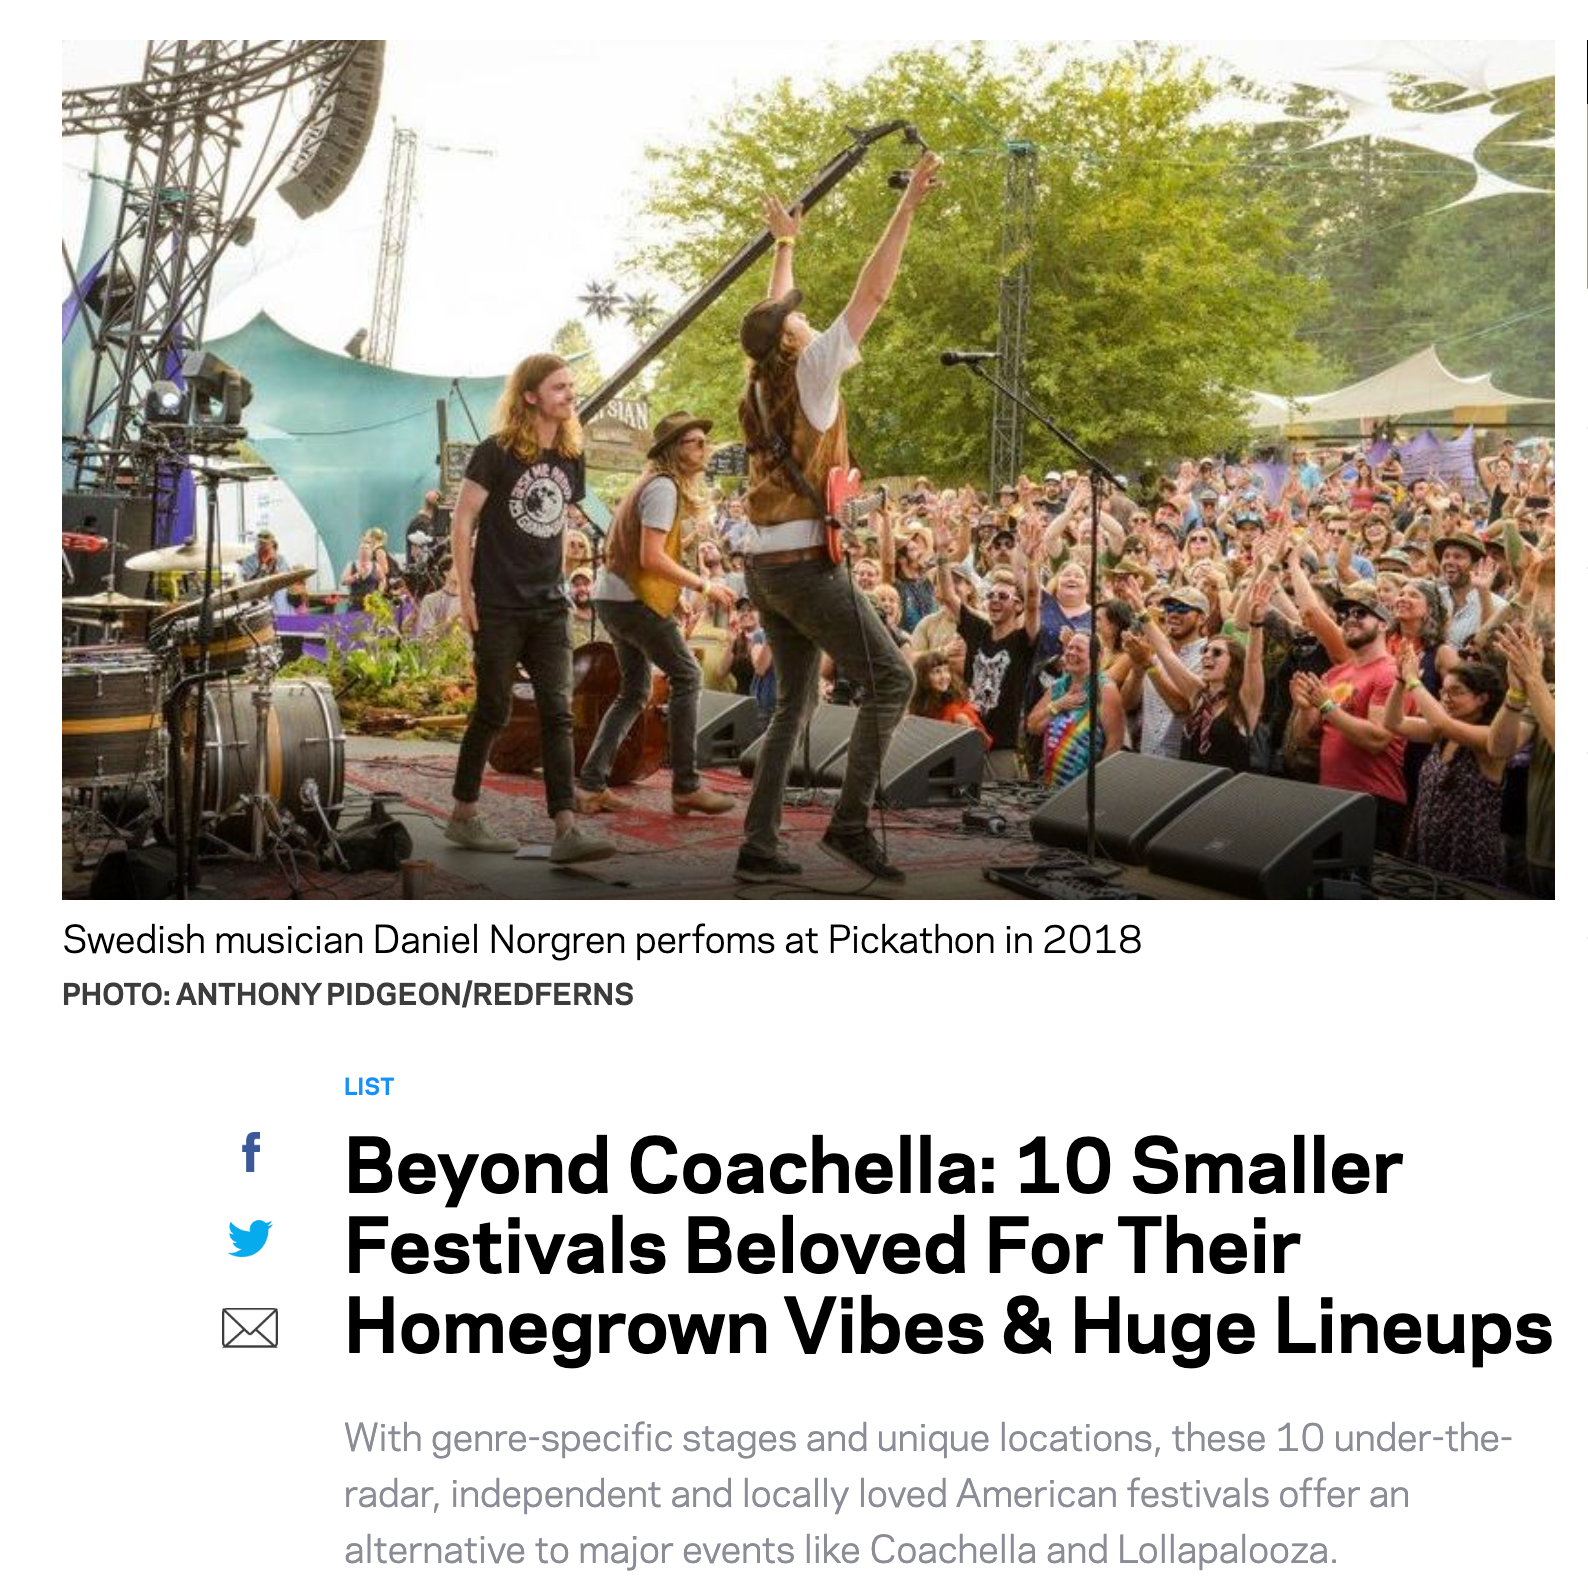 Beyond Coachella: 10 Smaller Festivals Beloved For Their Homegrown Vibes & Huge Lineups